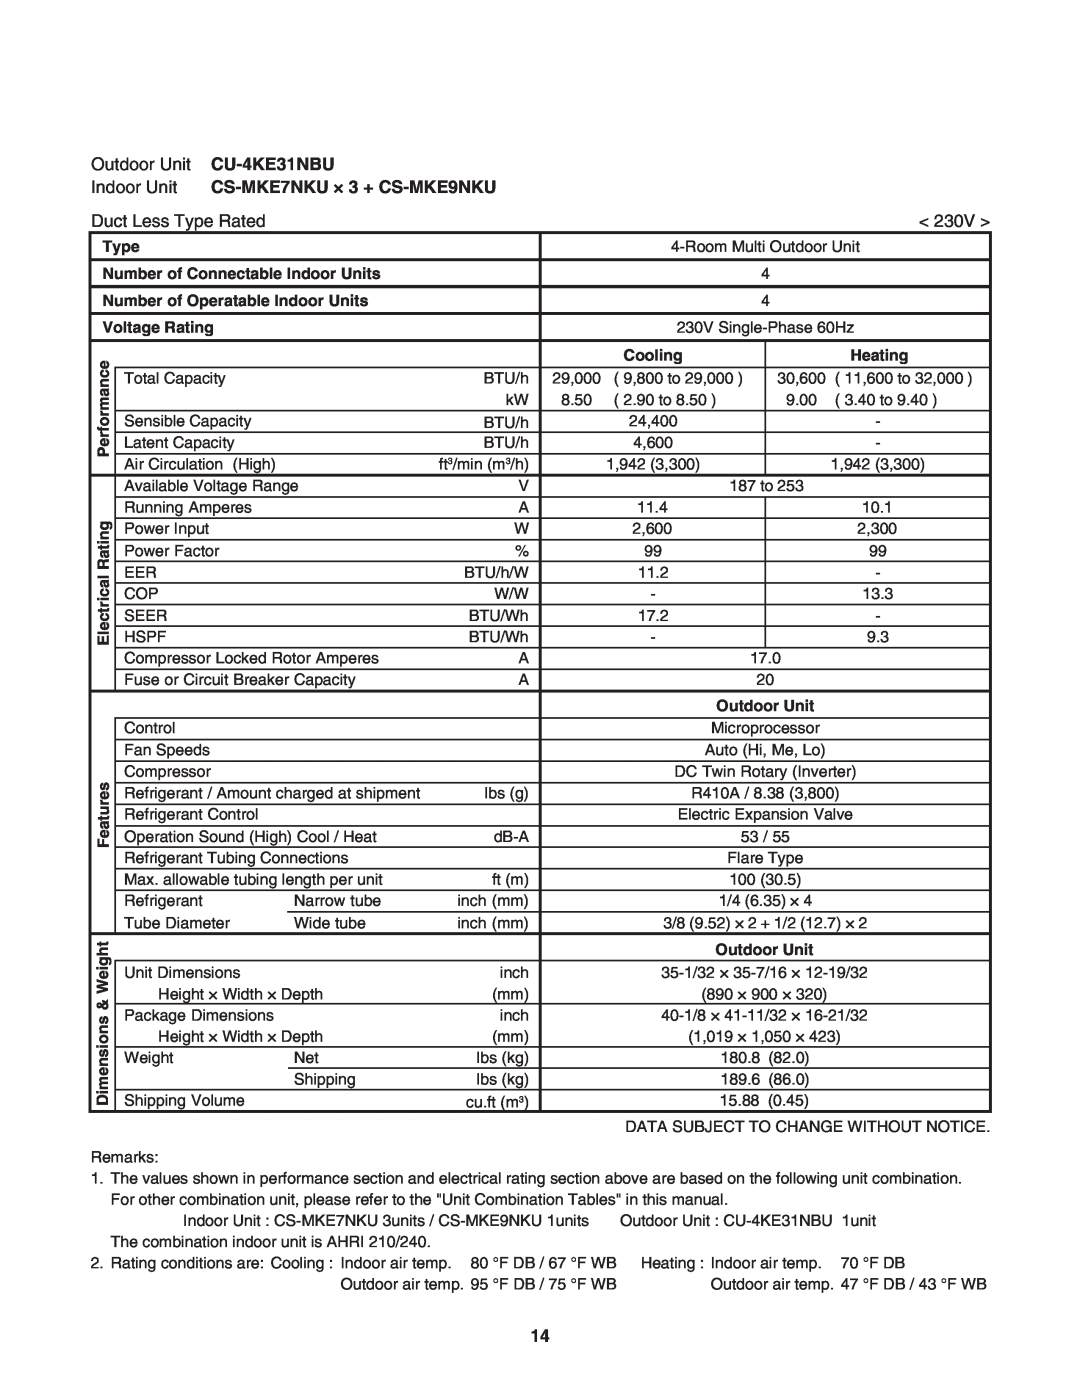 Panasonic CU-3KE19NBU Type, Number of Connectable Indoor Units, Number of Operatable Indoor Units, Voltage Rating, Cooling 